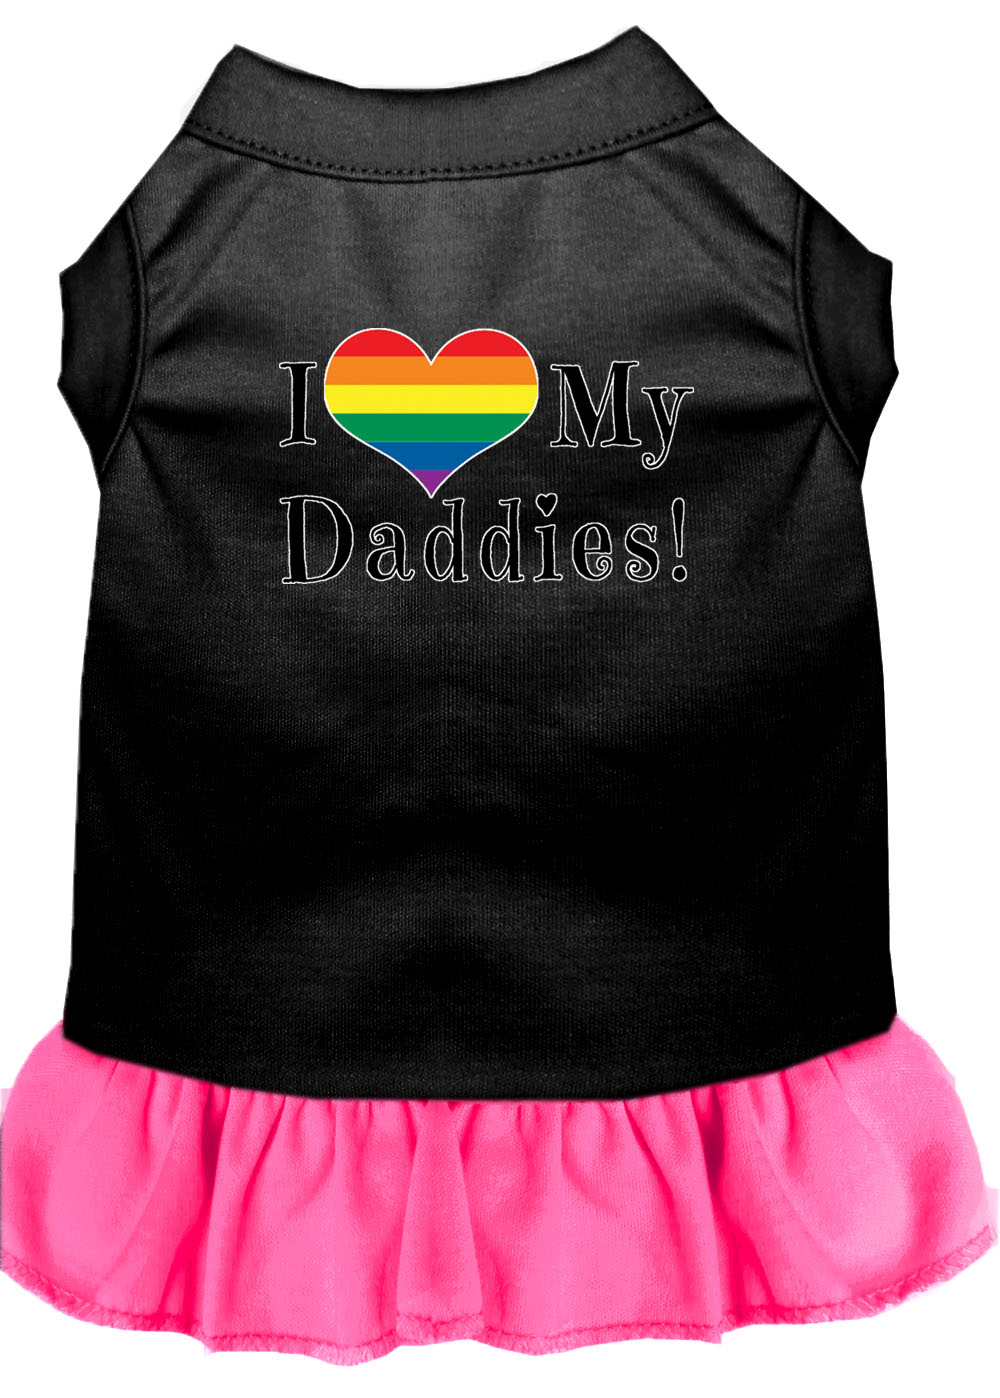 I Heart my Daddies Screen Print Dog Dress Black with Bright Pink XXXL